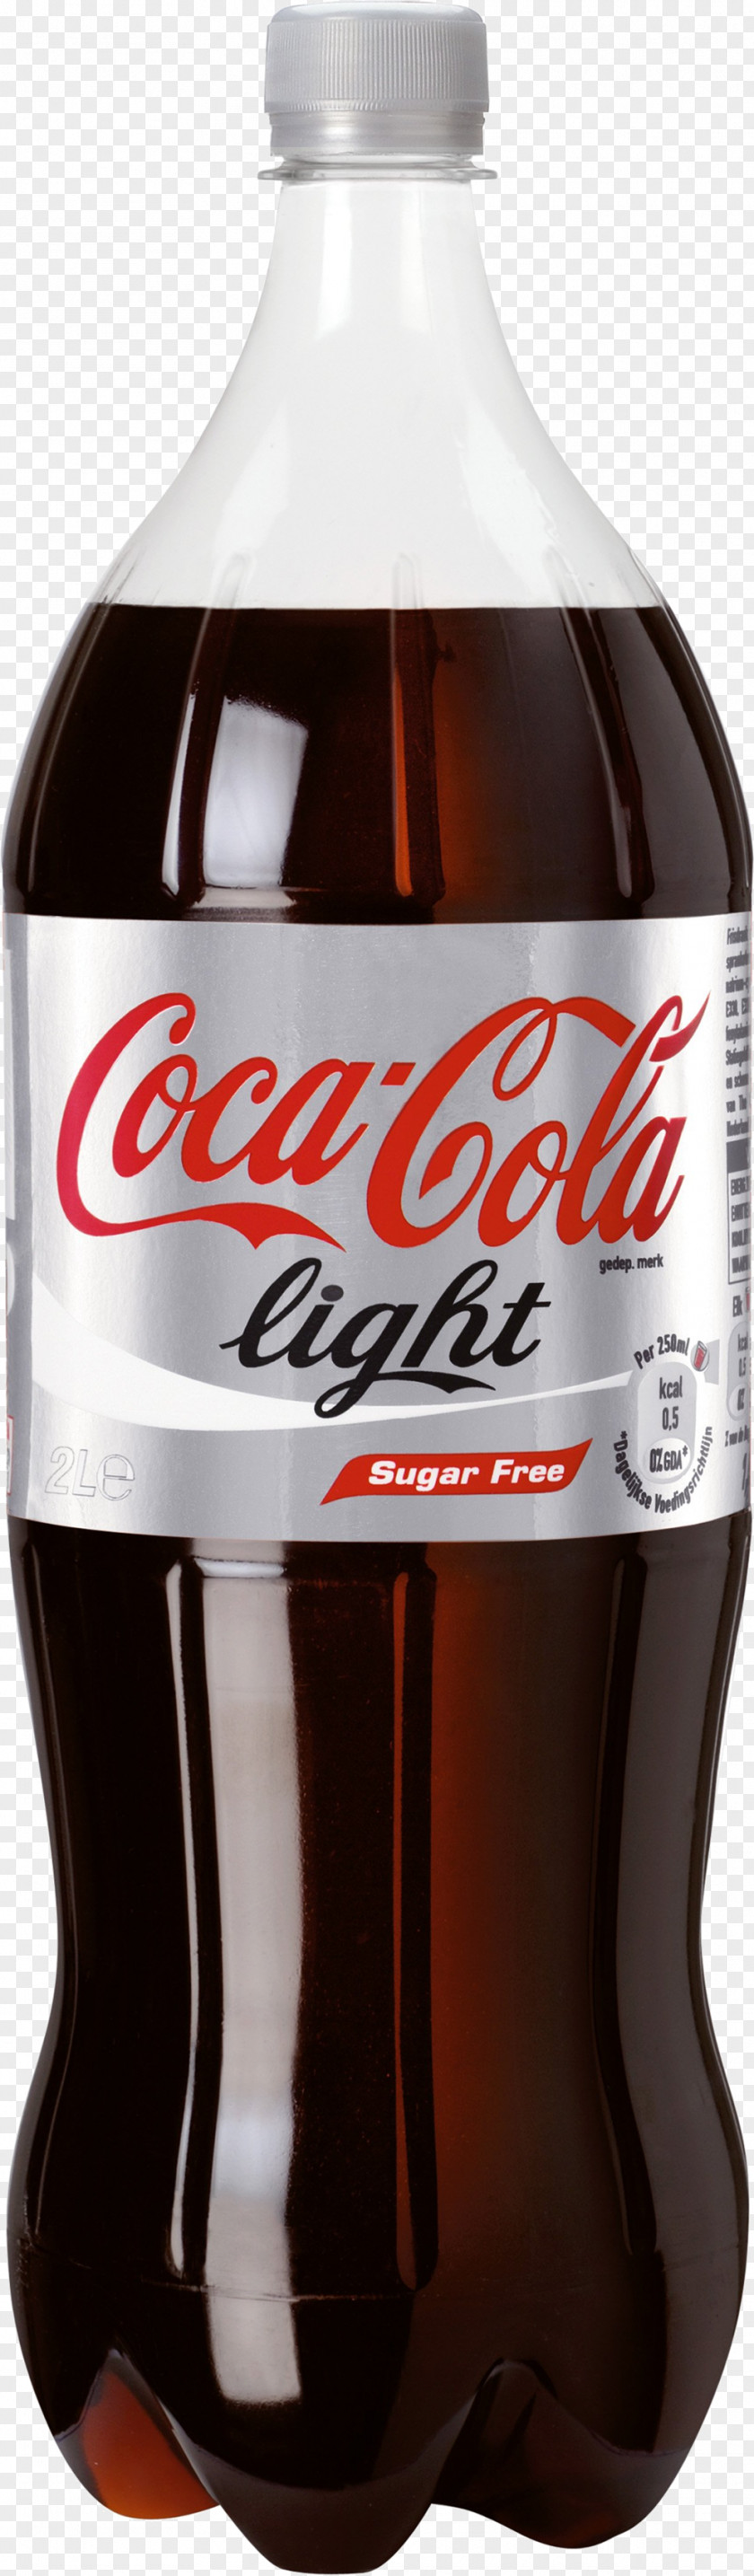 Coca Cola Bottle Image Coca-Cola Soft Drink Sprite Zero Diet Coke PNG